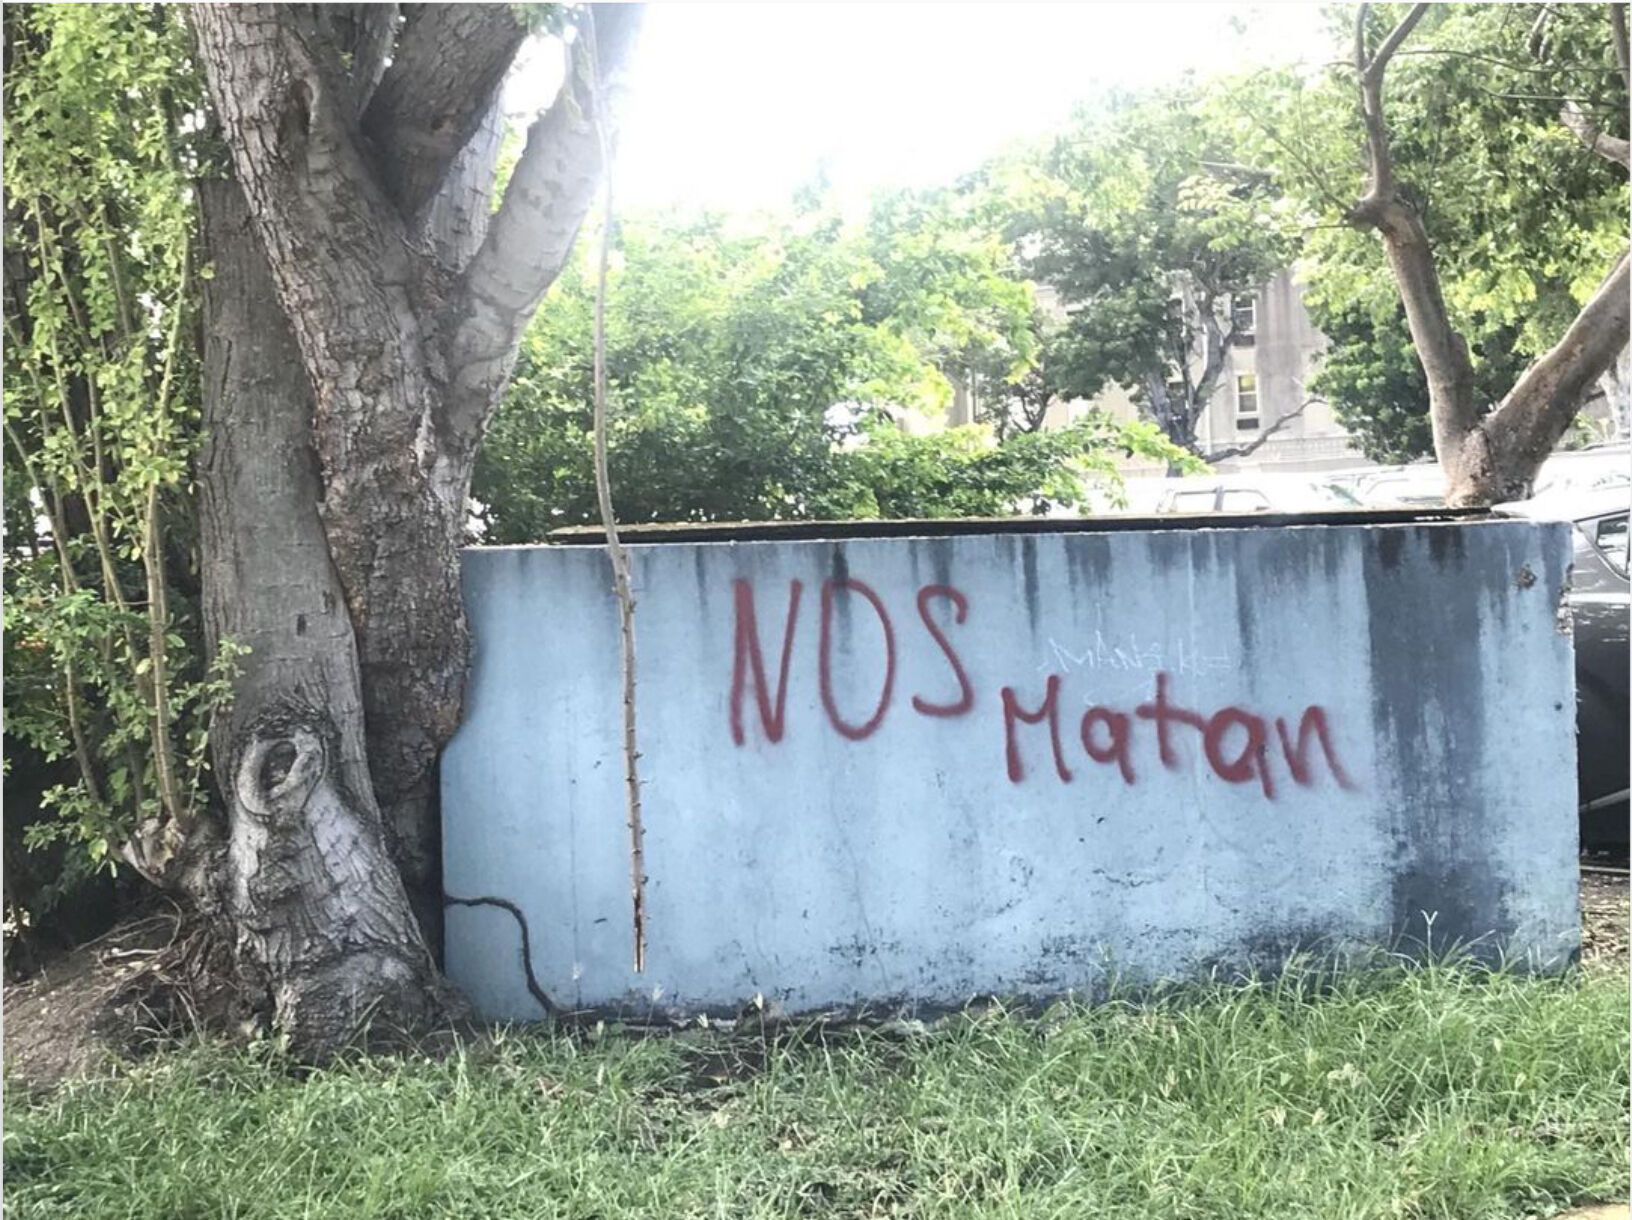 Graffiti written on a cement wall in red reading "nos matan".